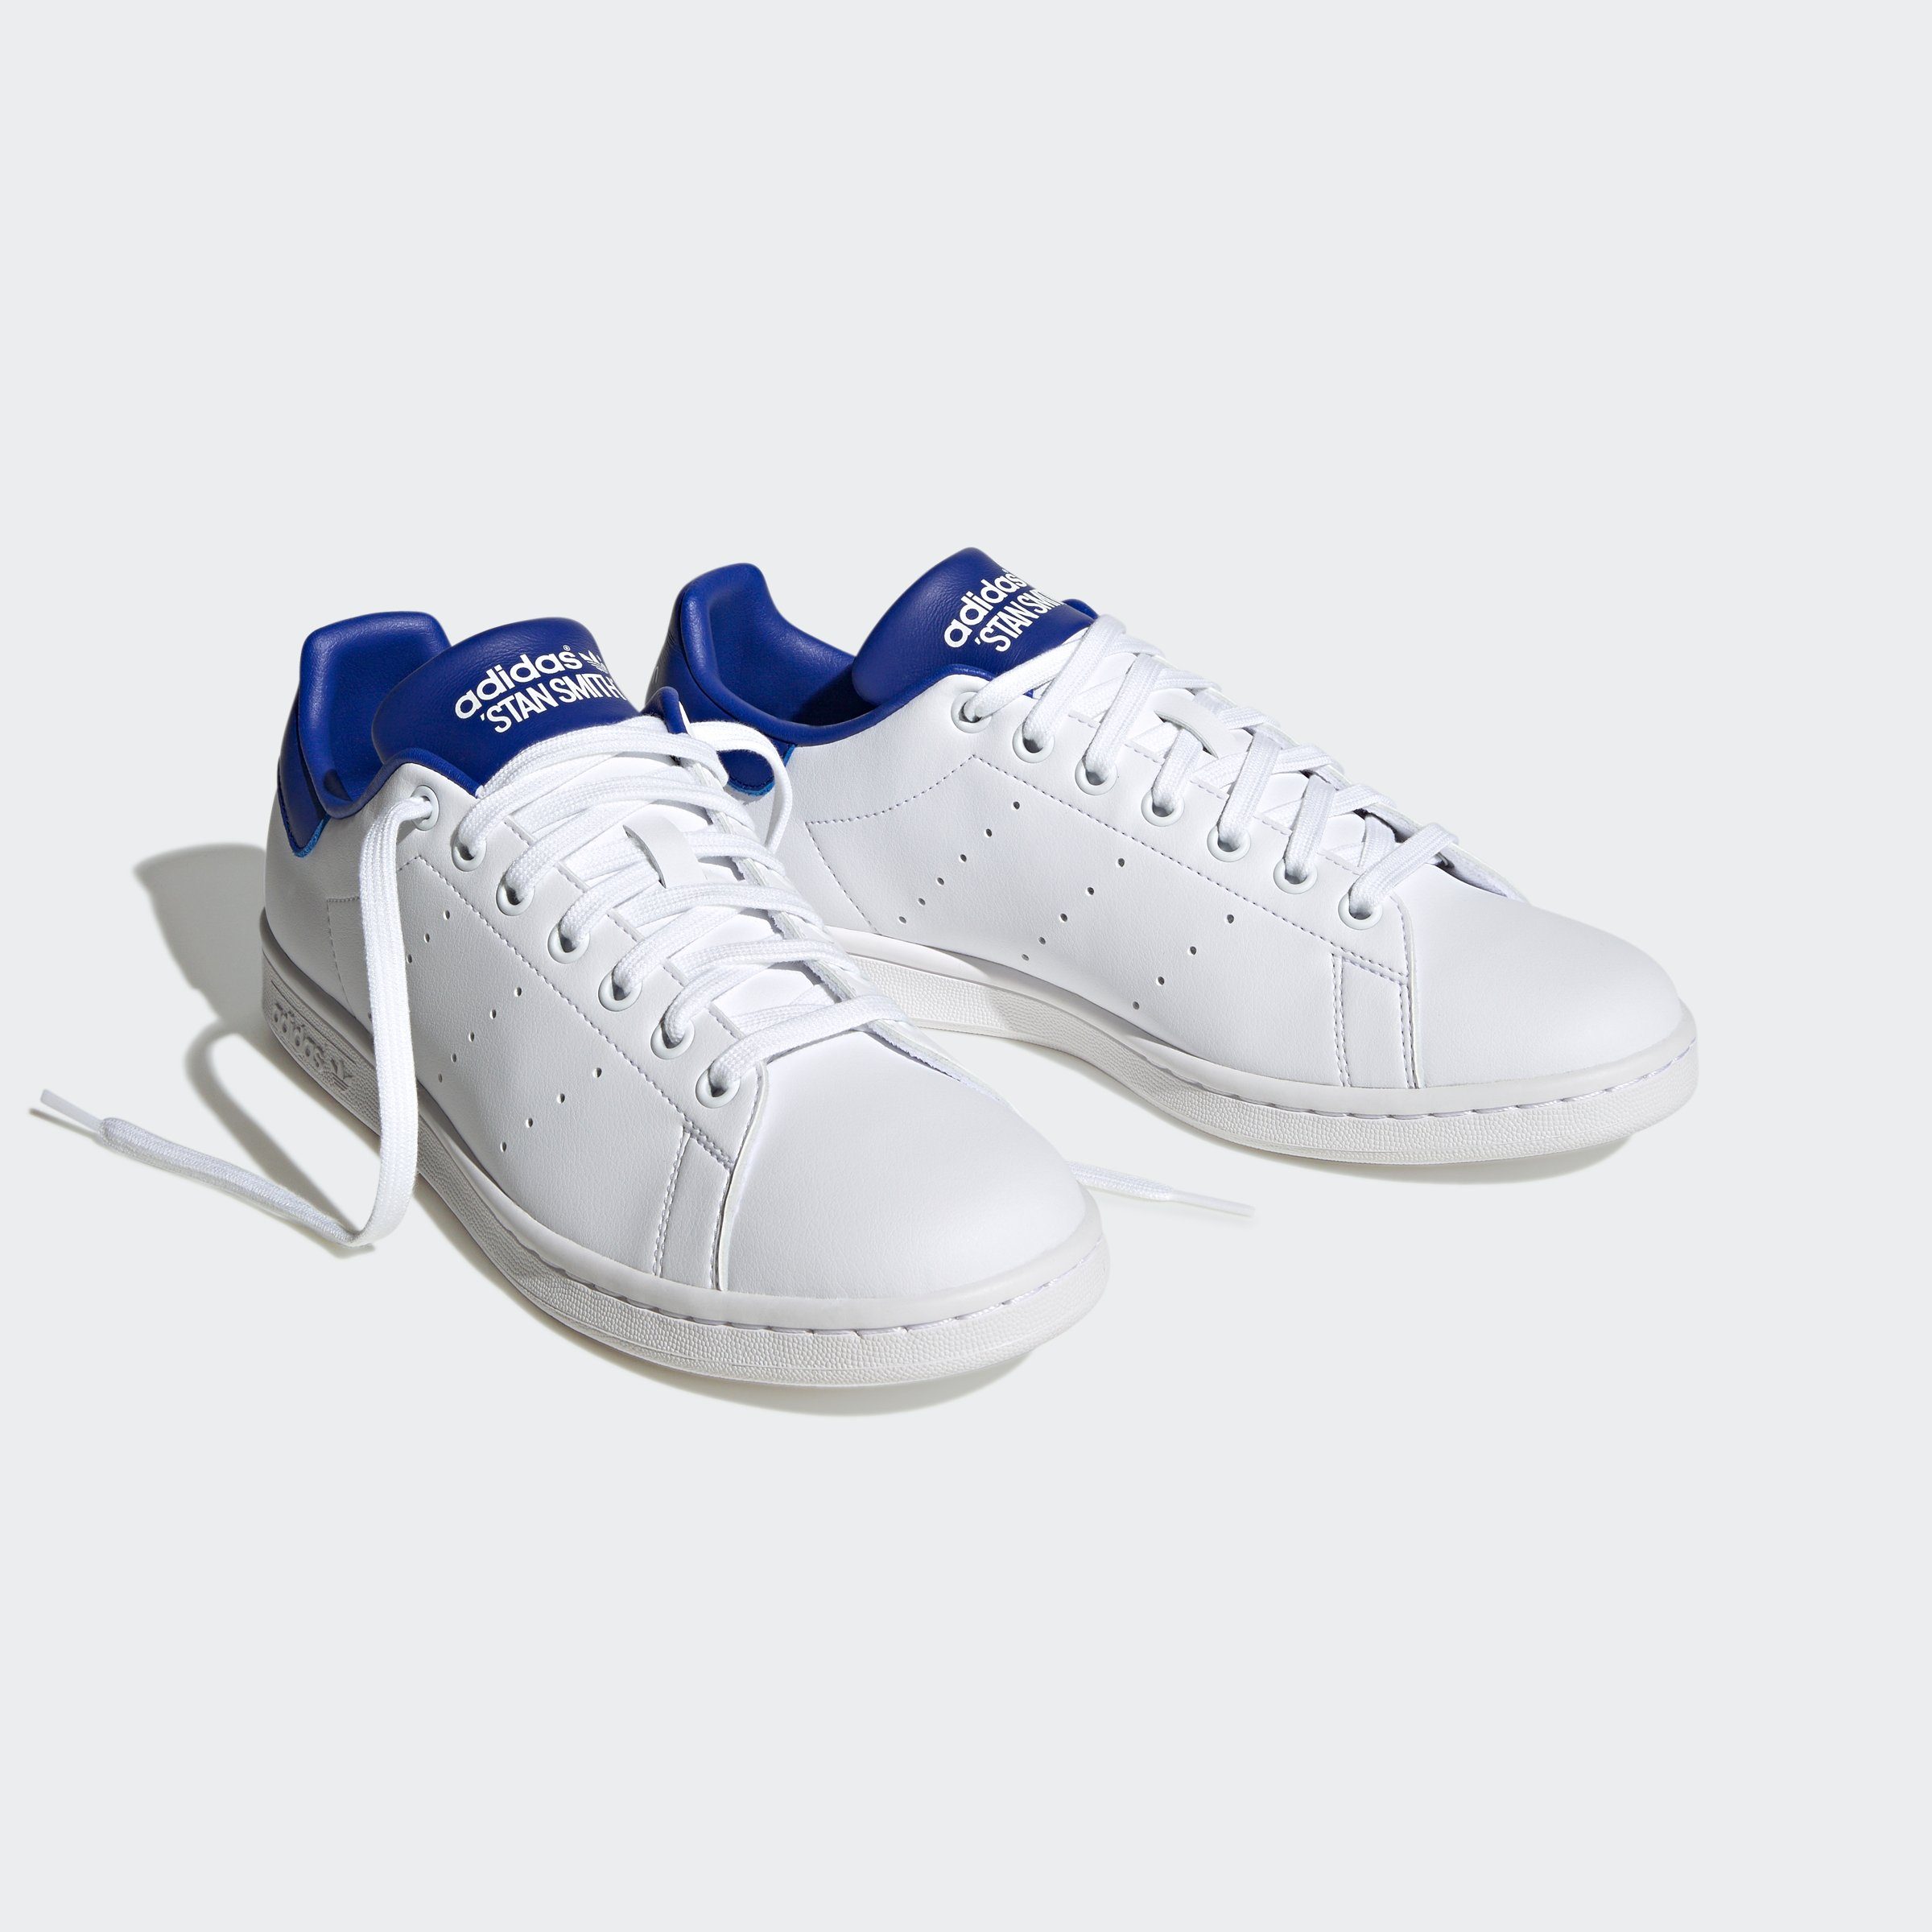 Cloud SMITH Blue Originals / adidas Semi White Cloud White / Sneaker Lucid STAN